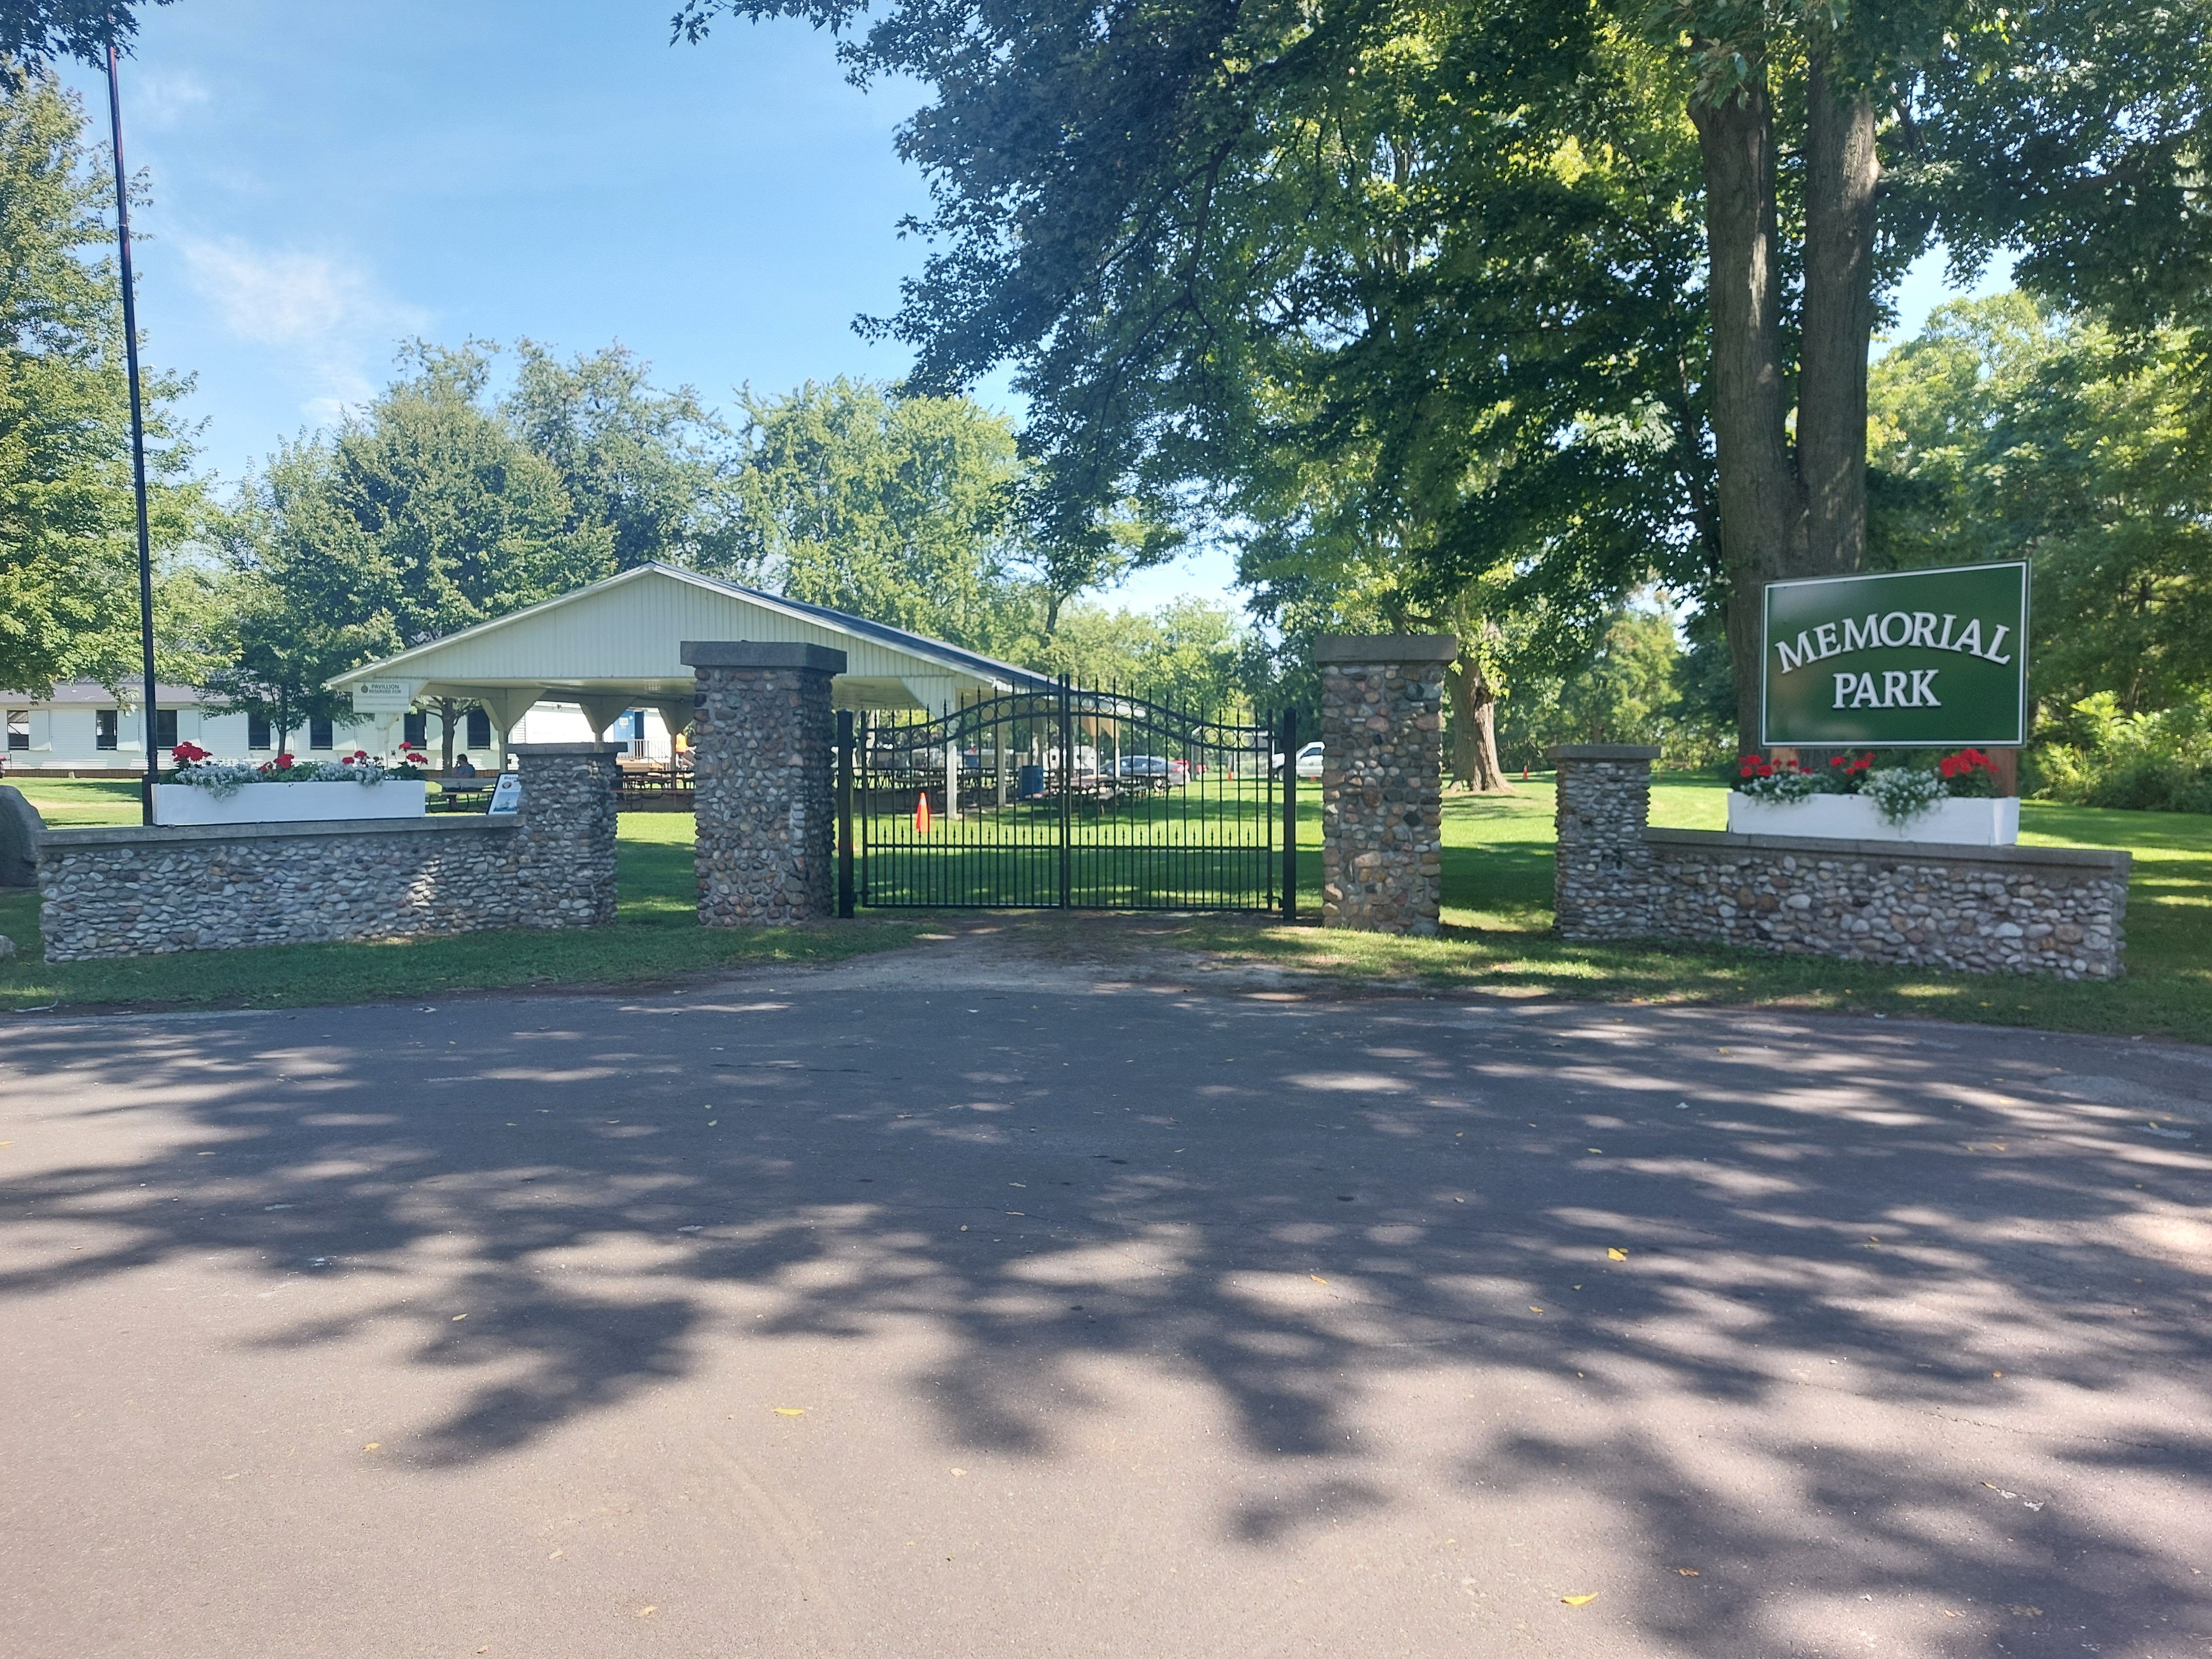 Gates and sign at Memorial Park